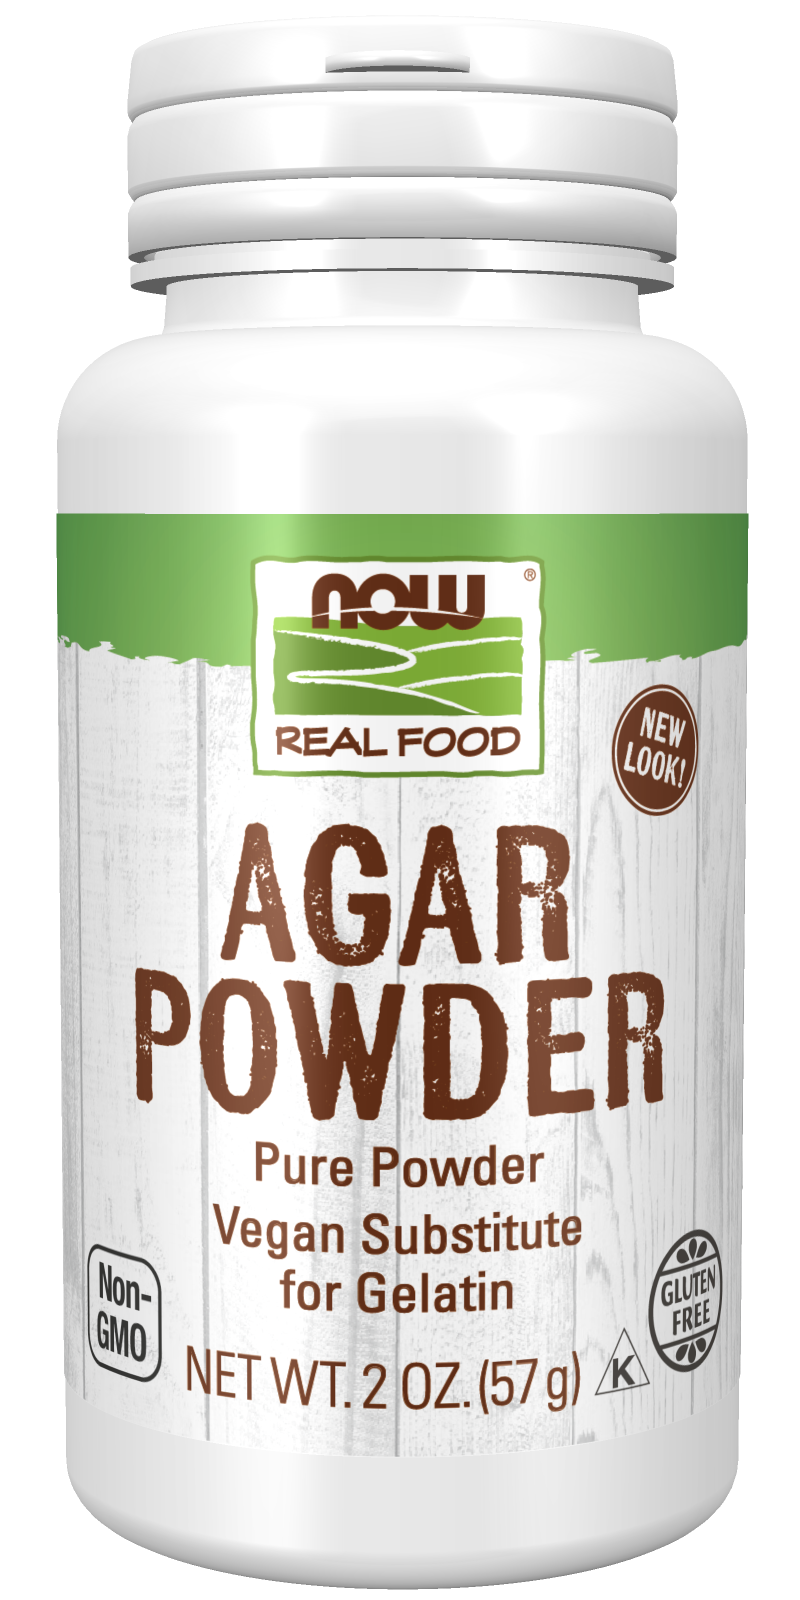 Agar Powder - 2 oz. Vegan Substitute for Gelatin